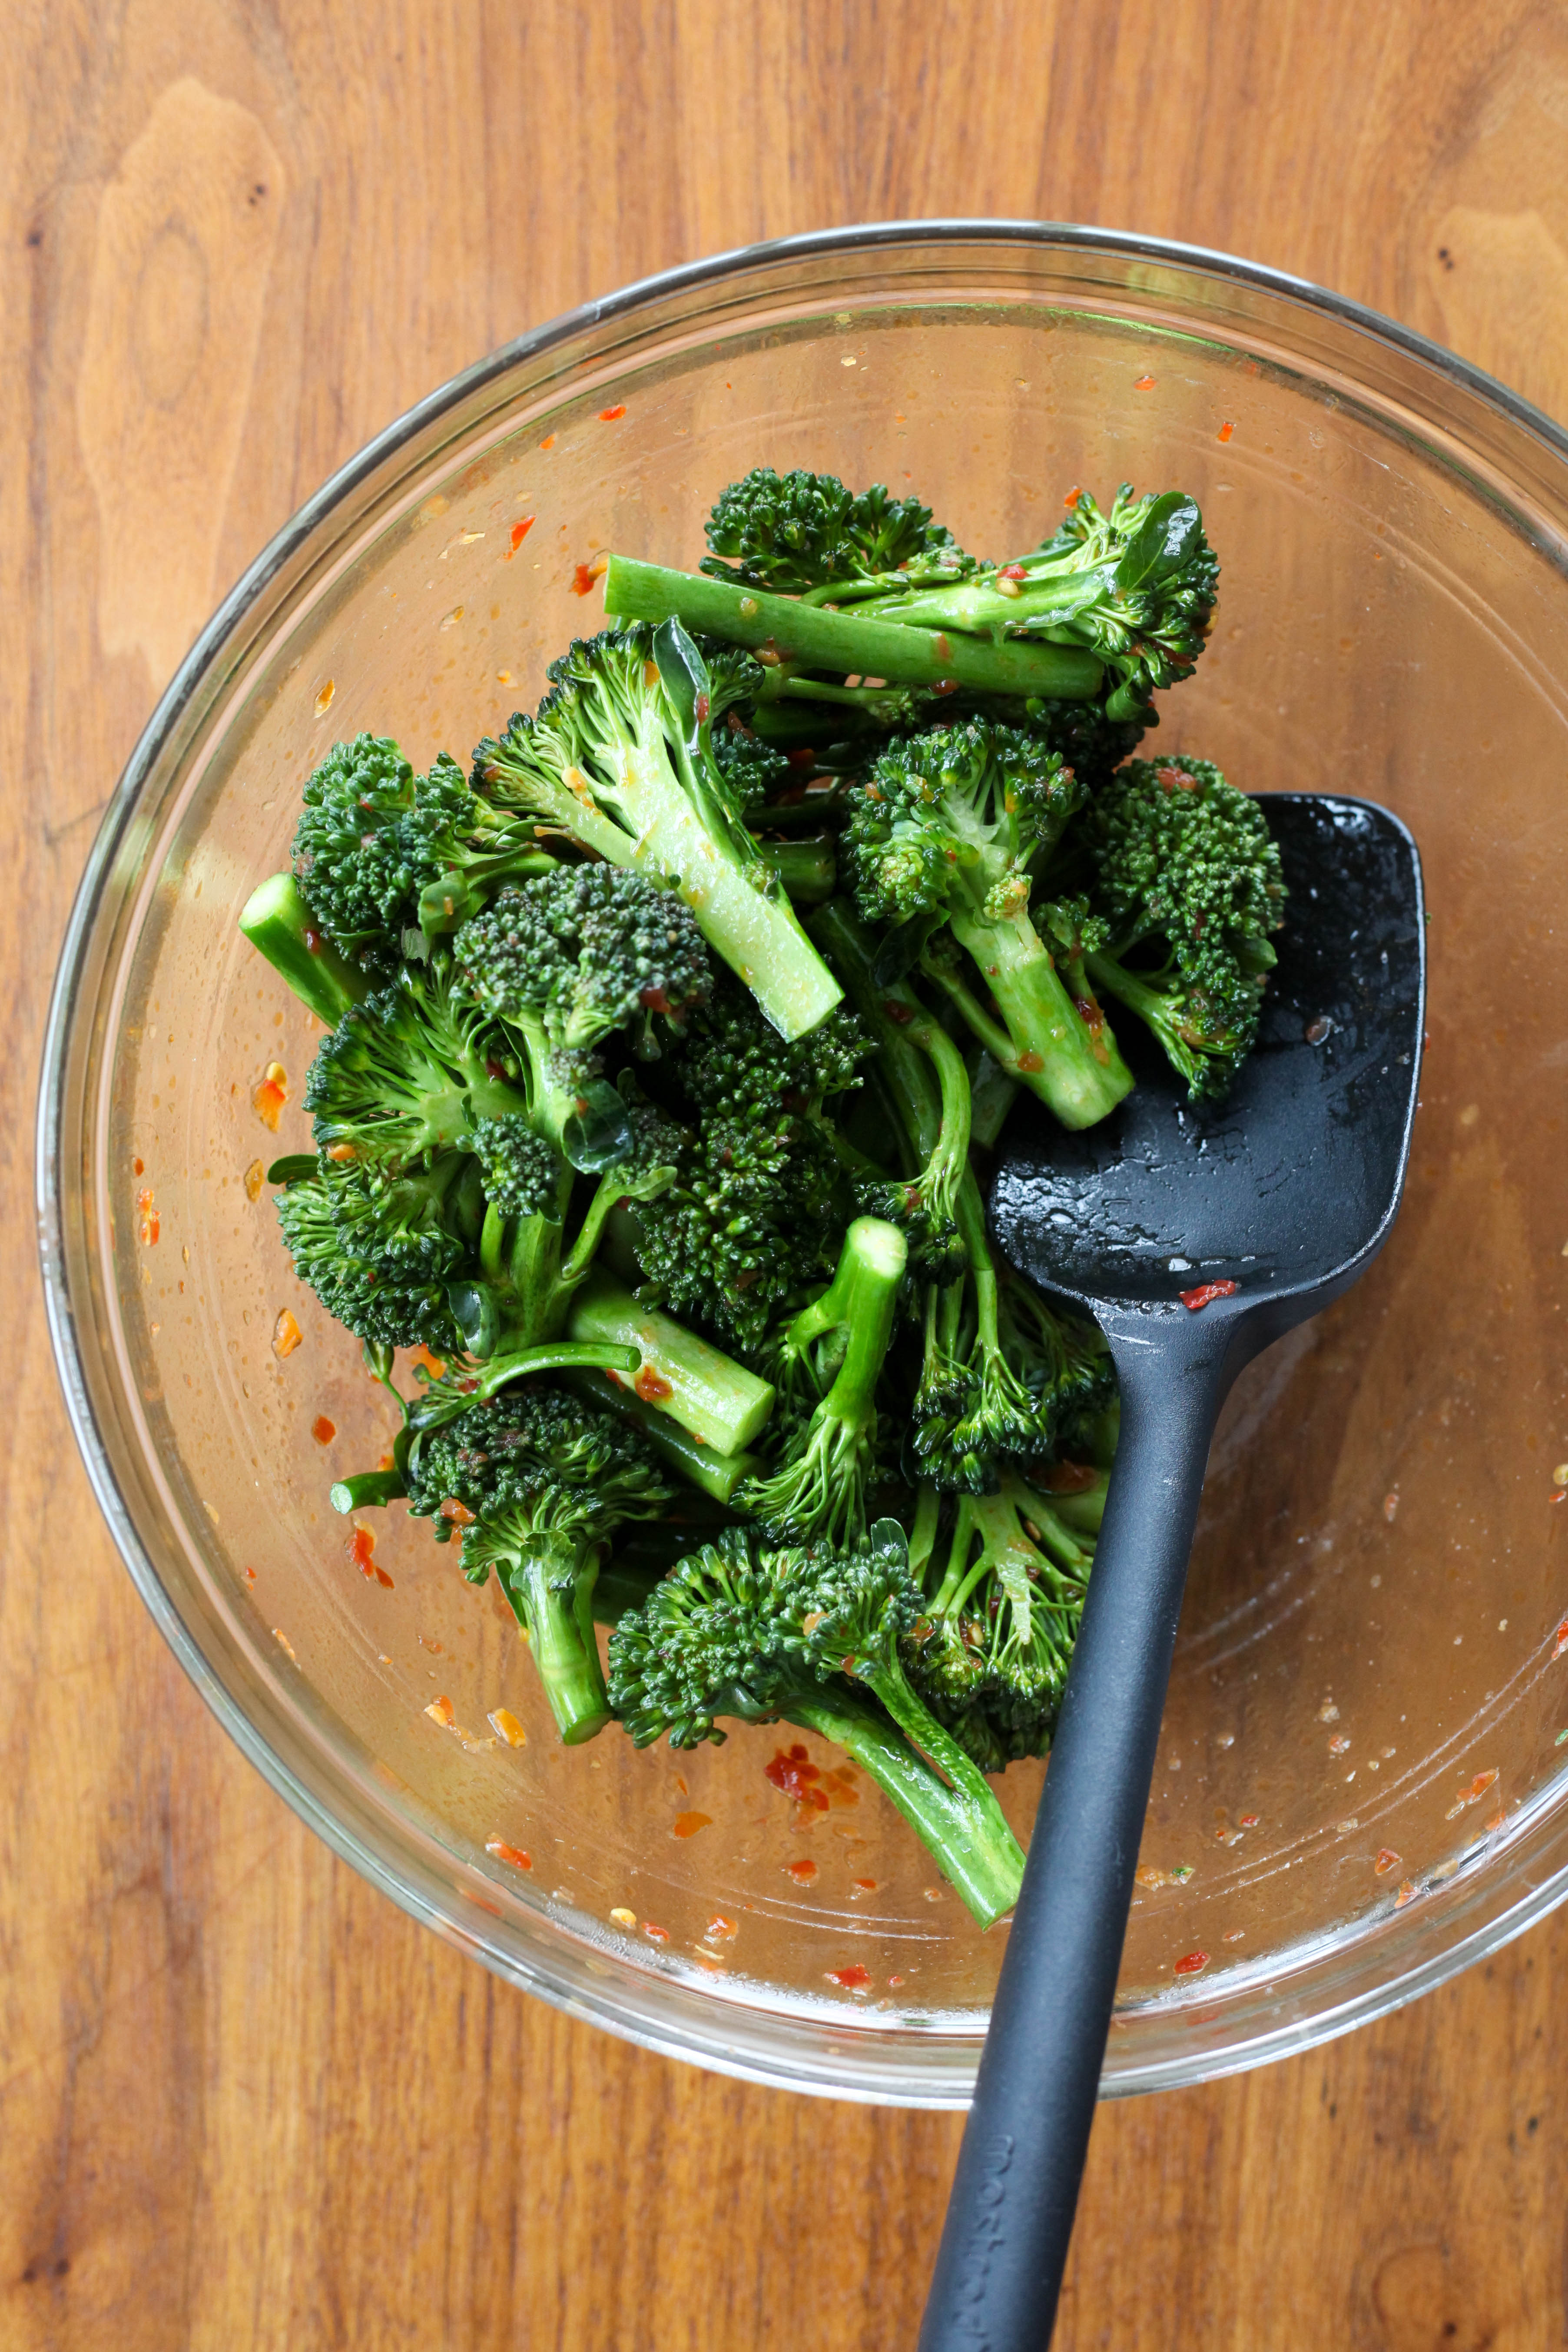 Broccolini and sambal oelek